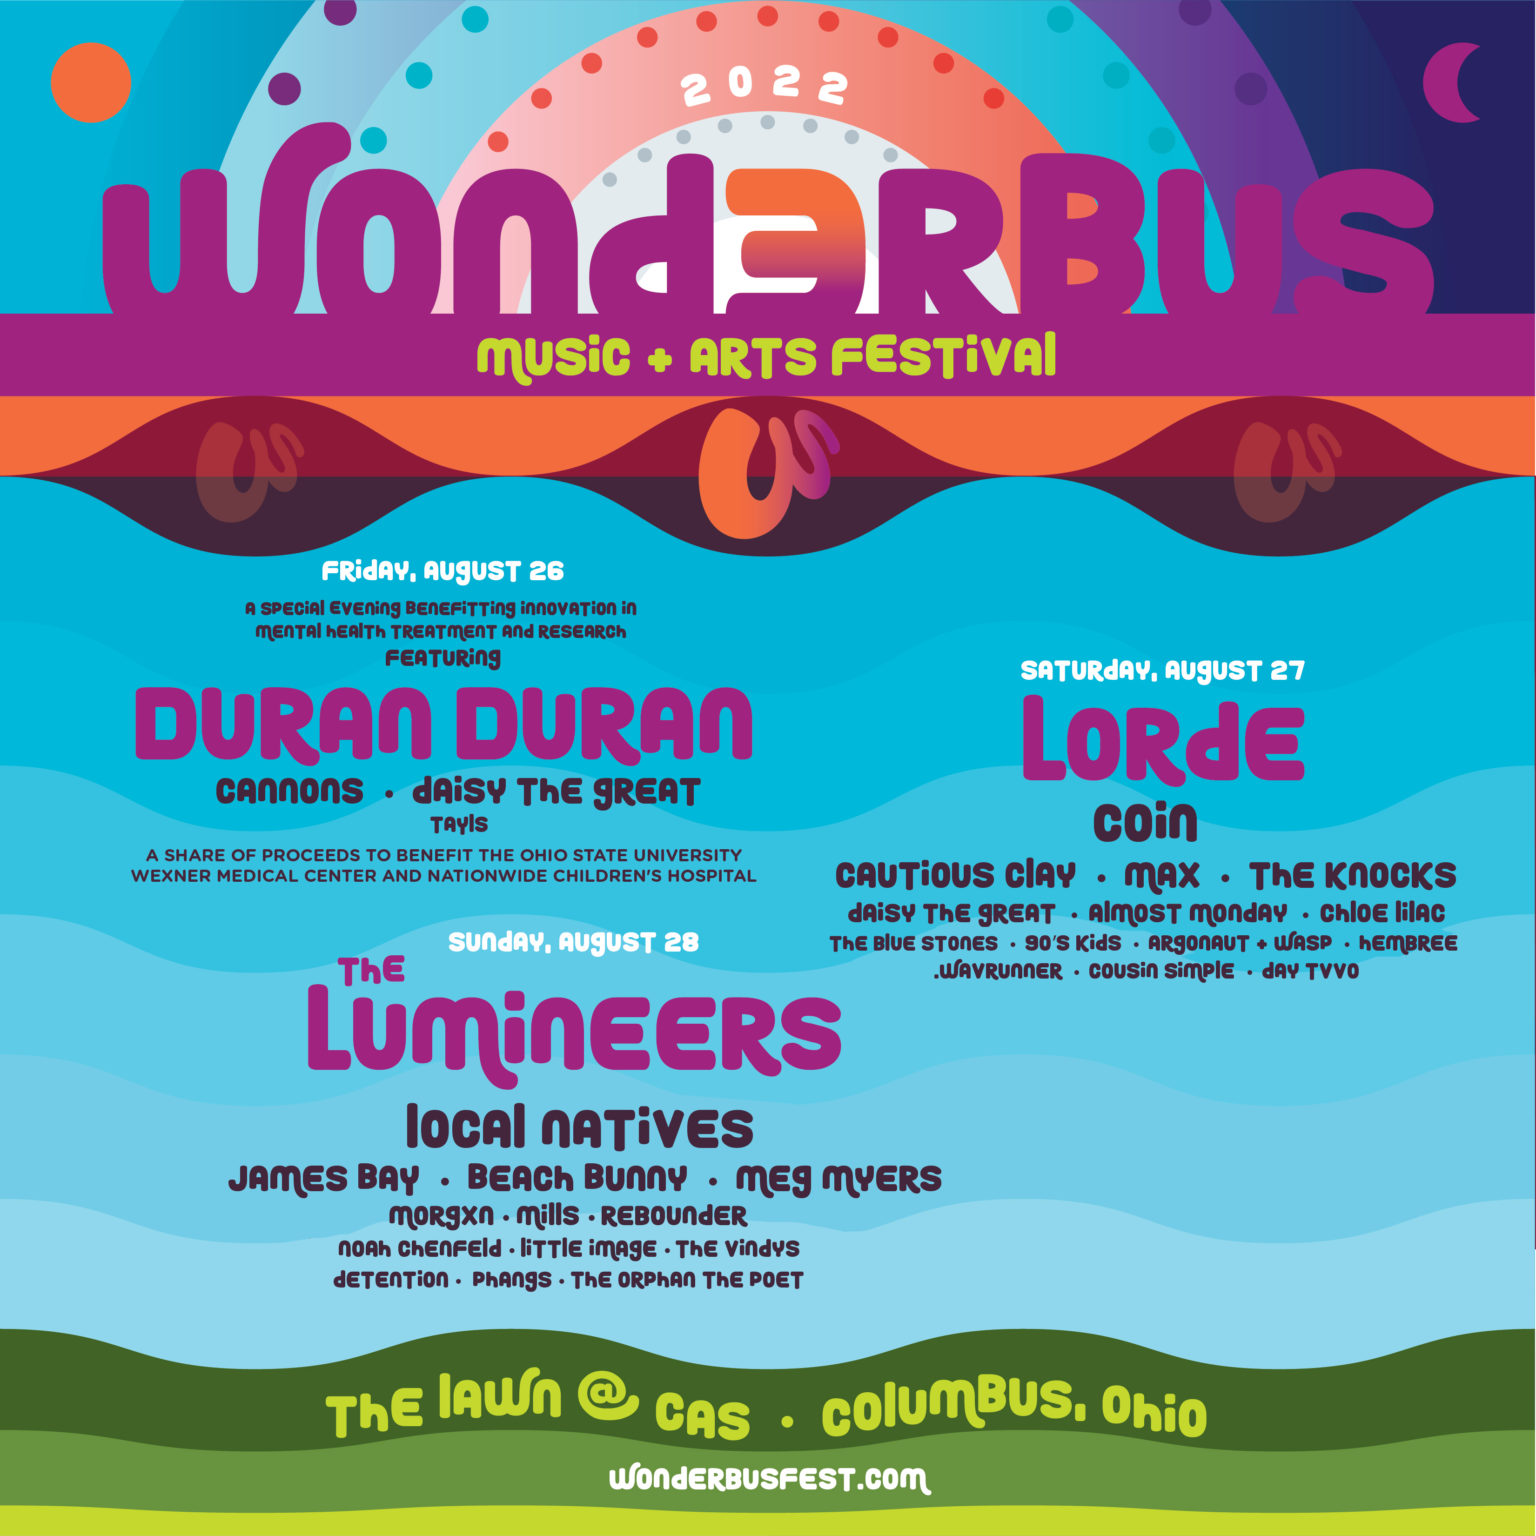 Buy Tickets to WonderBus Music & Arts Festival in Columbus on Aug 26